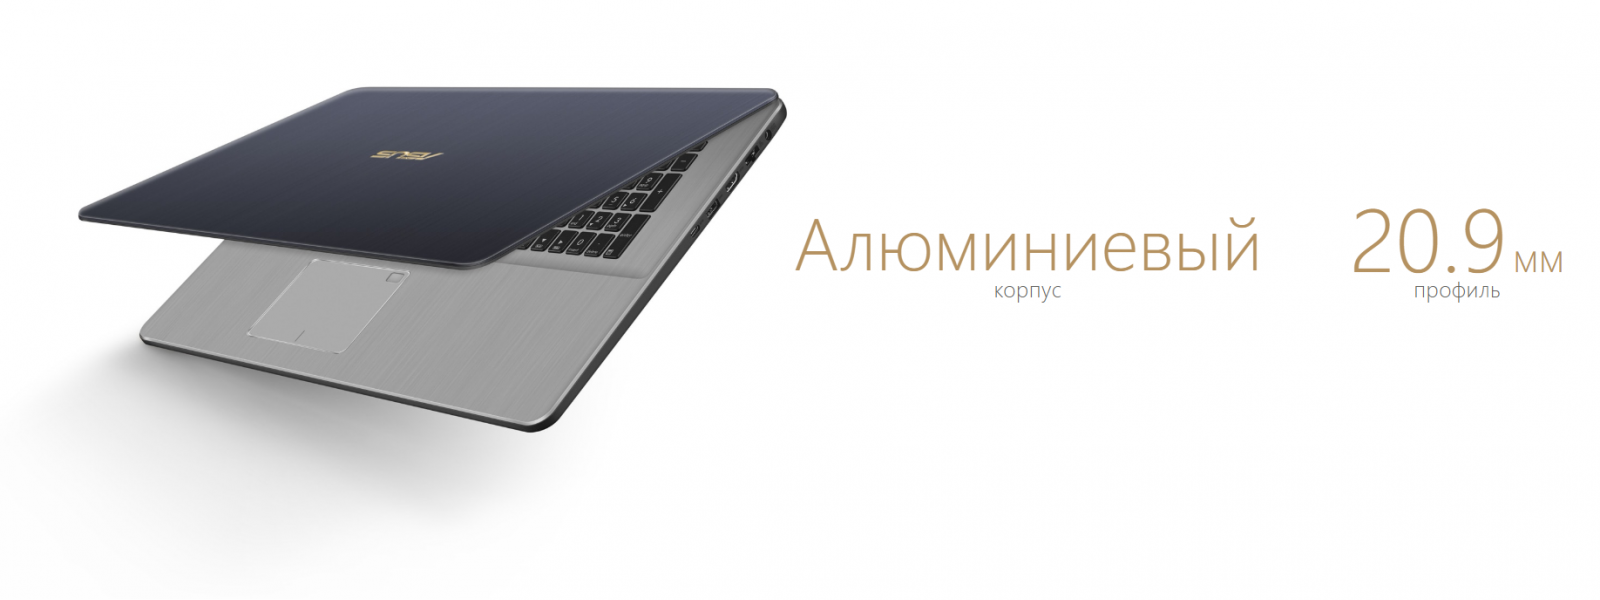 ASUS VivoBook Pro 17 N705UD легкий и тонкий 20,9 мм и 2.1 кг